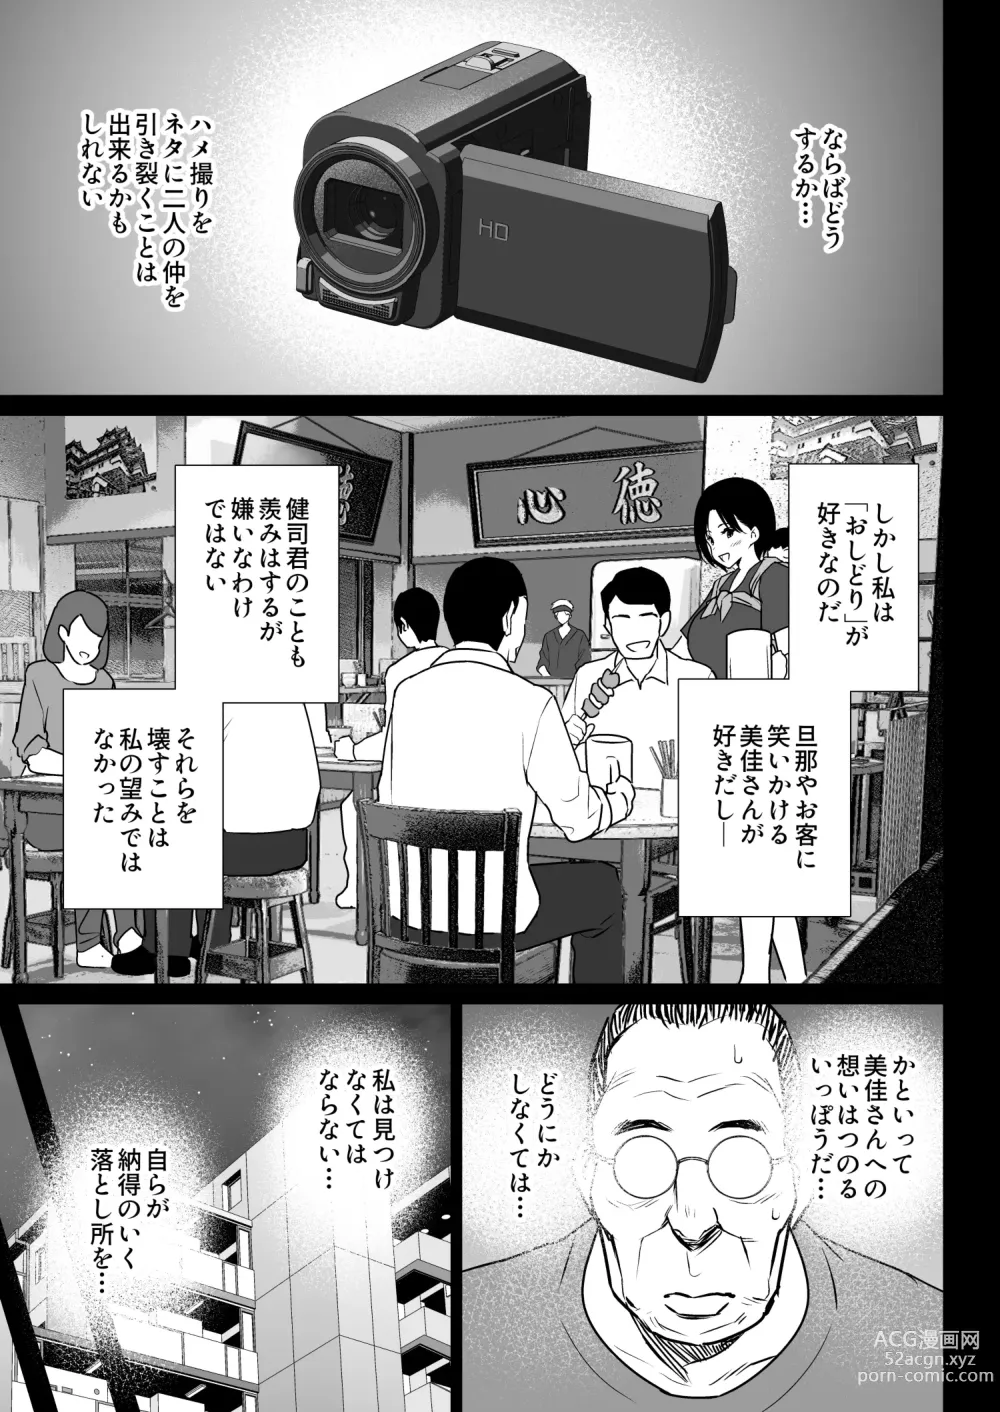 Page 64 of doujinshi Oshidori Fuufu Yakitorare